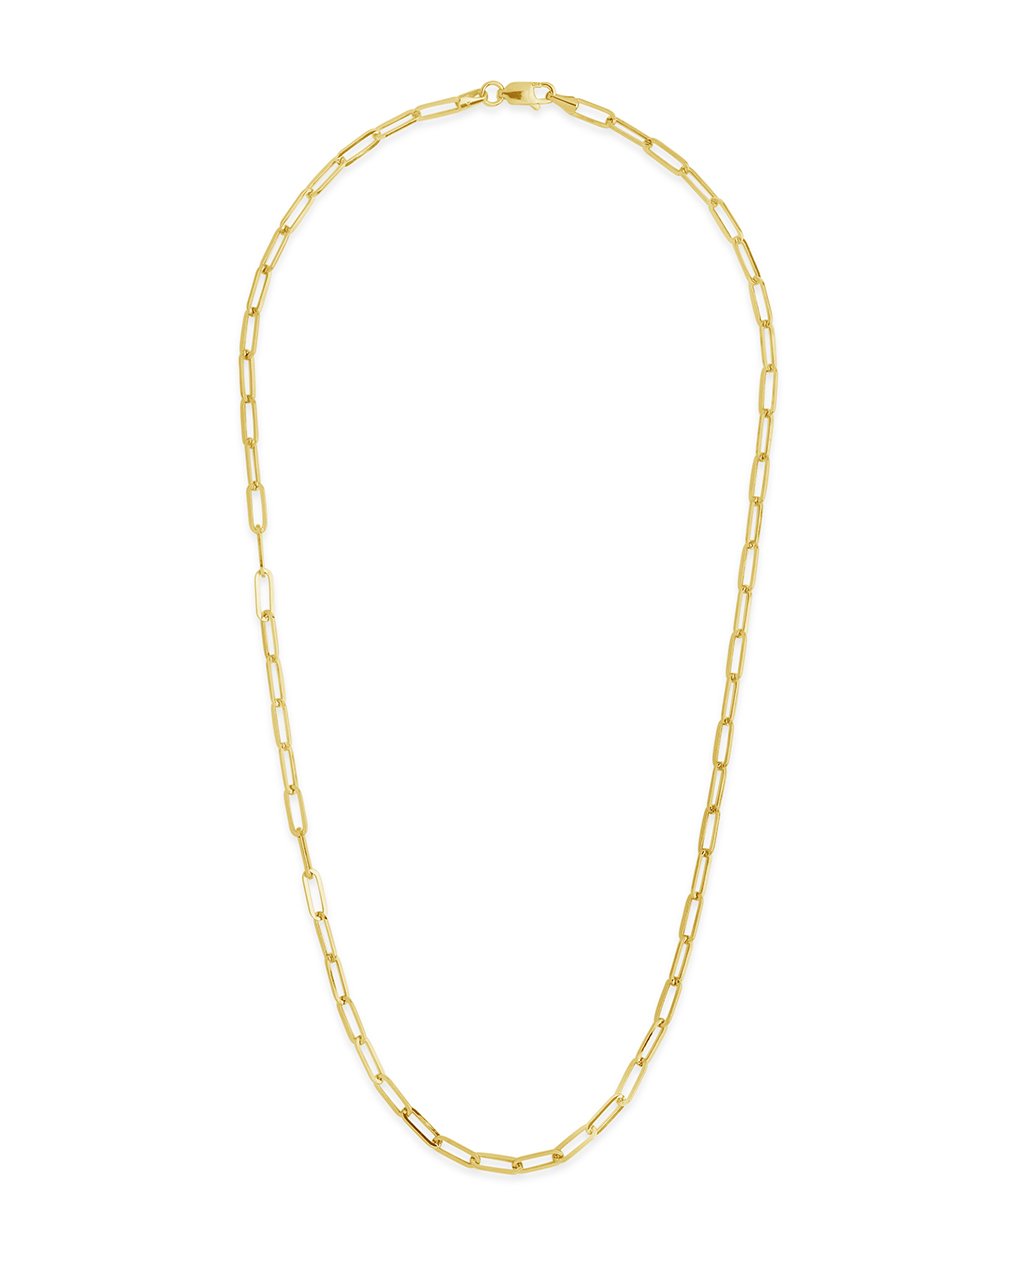 Paperclip Chain Necklace 14K, 24 Yellow Gold, Women's & Men's, by Ben Bridge Jewelers